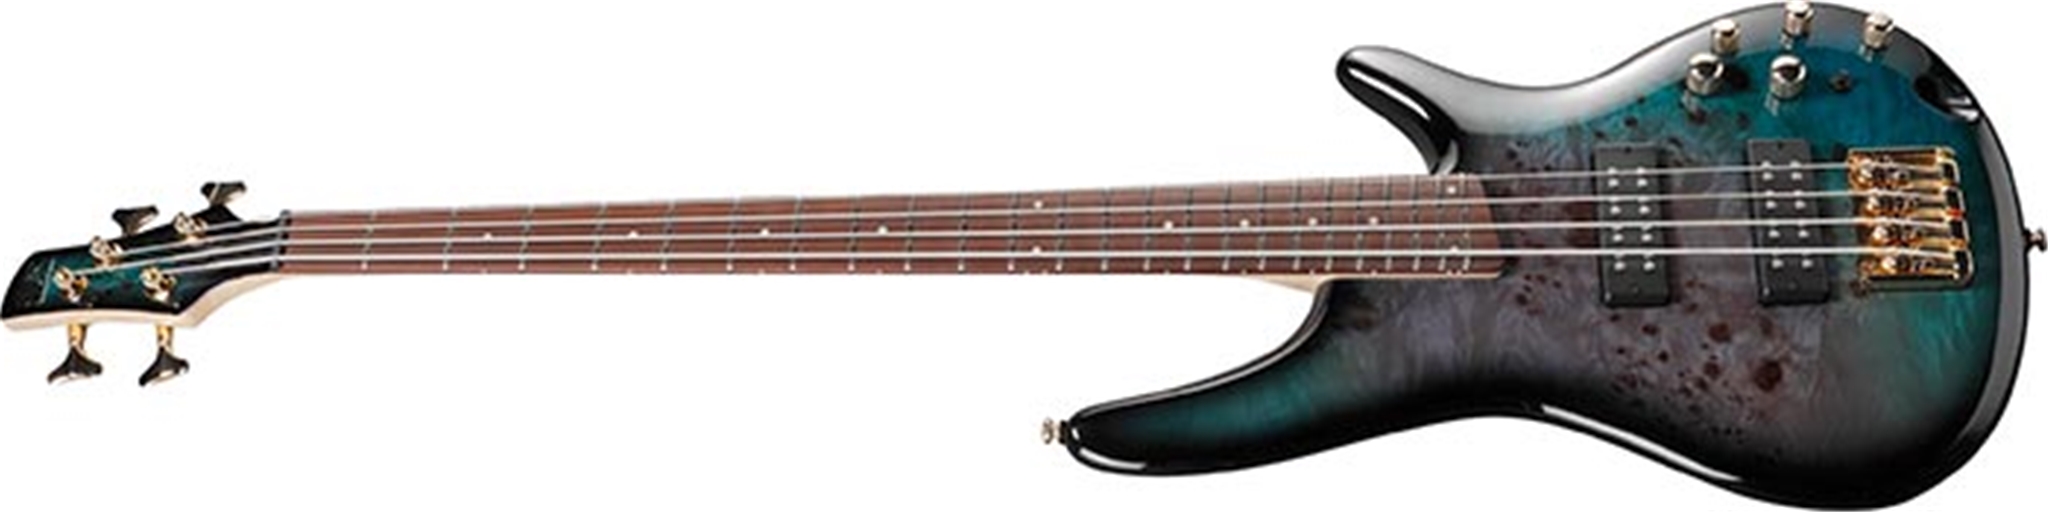 Ibanez  SR400EPBDX Tropical Seafloor Burst  4-String Electric Bass Guitar 